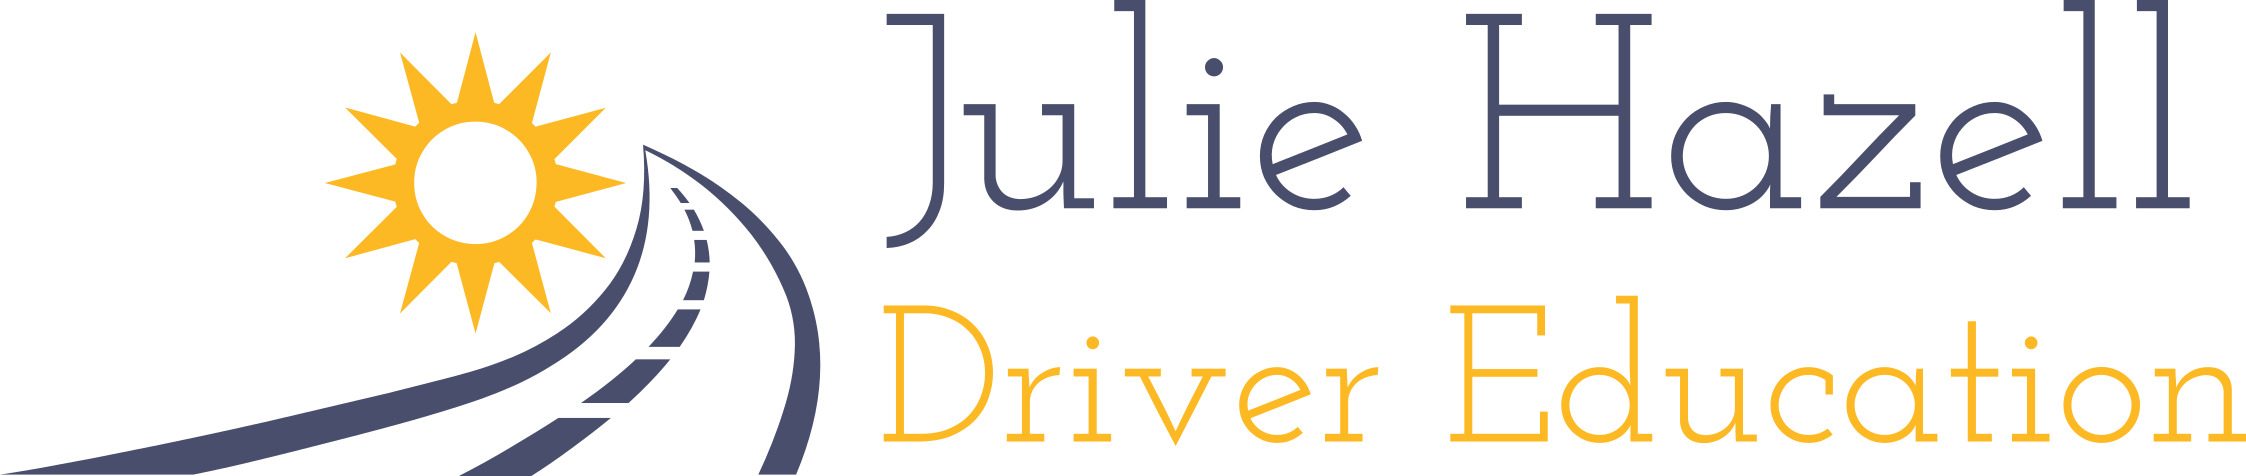 Julie Hazell Driver Education